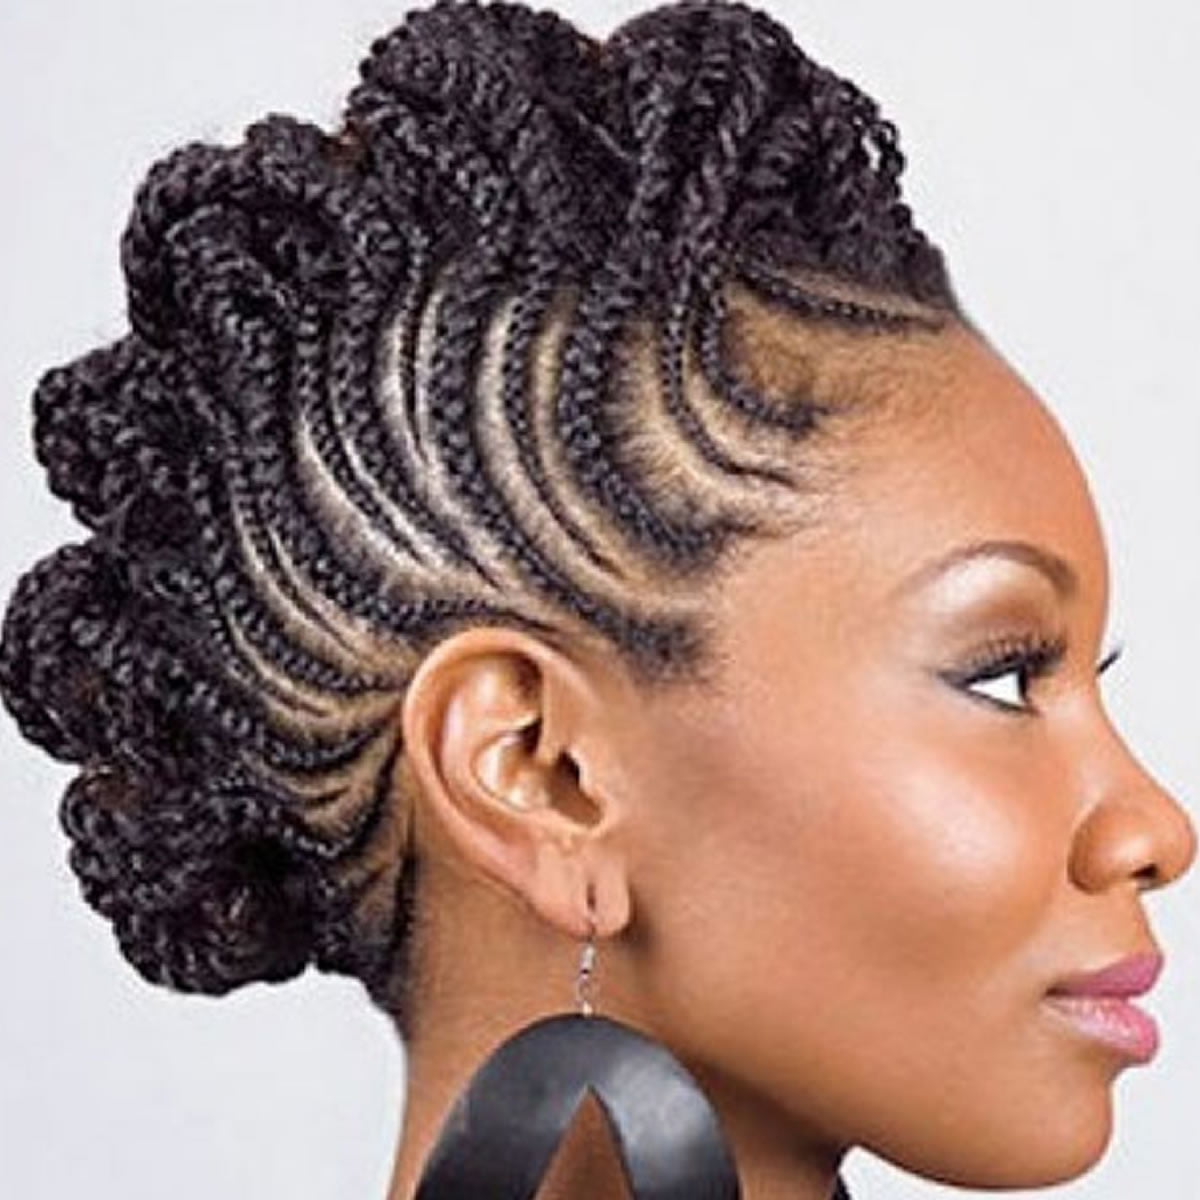 Mohawk hairstyles for black women in summer 2020-2021 ...